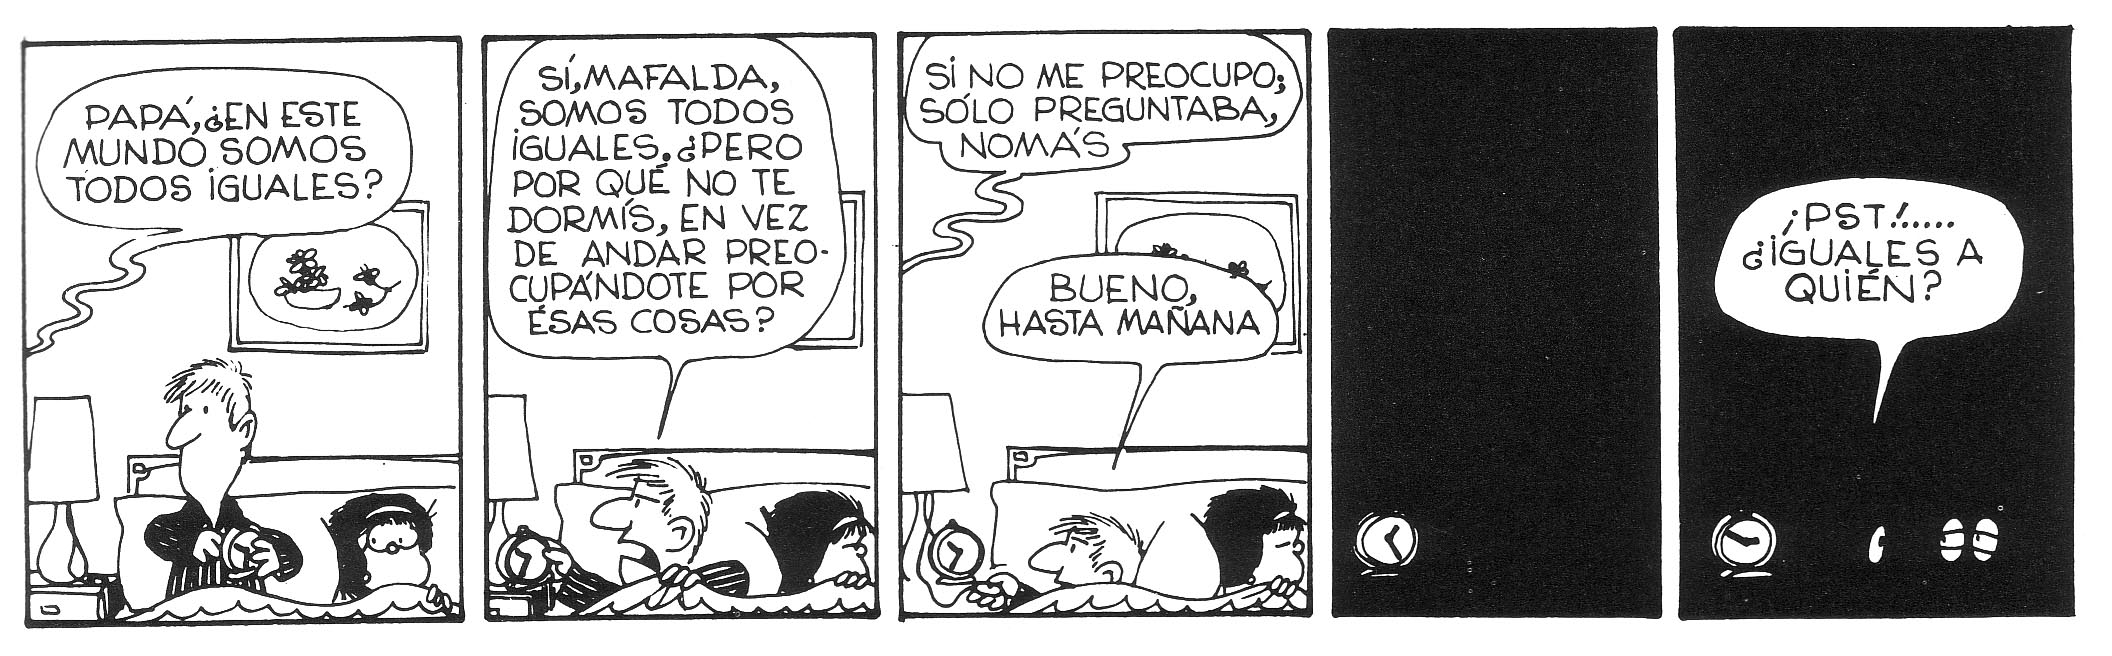 http://bibliocriptana.files.wordpress.com/2009/04/mafalda-2.jpg